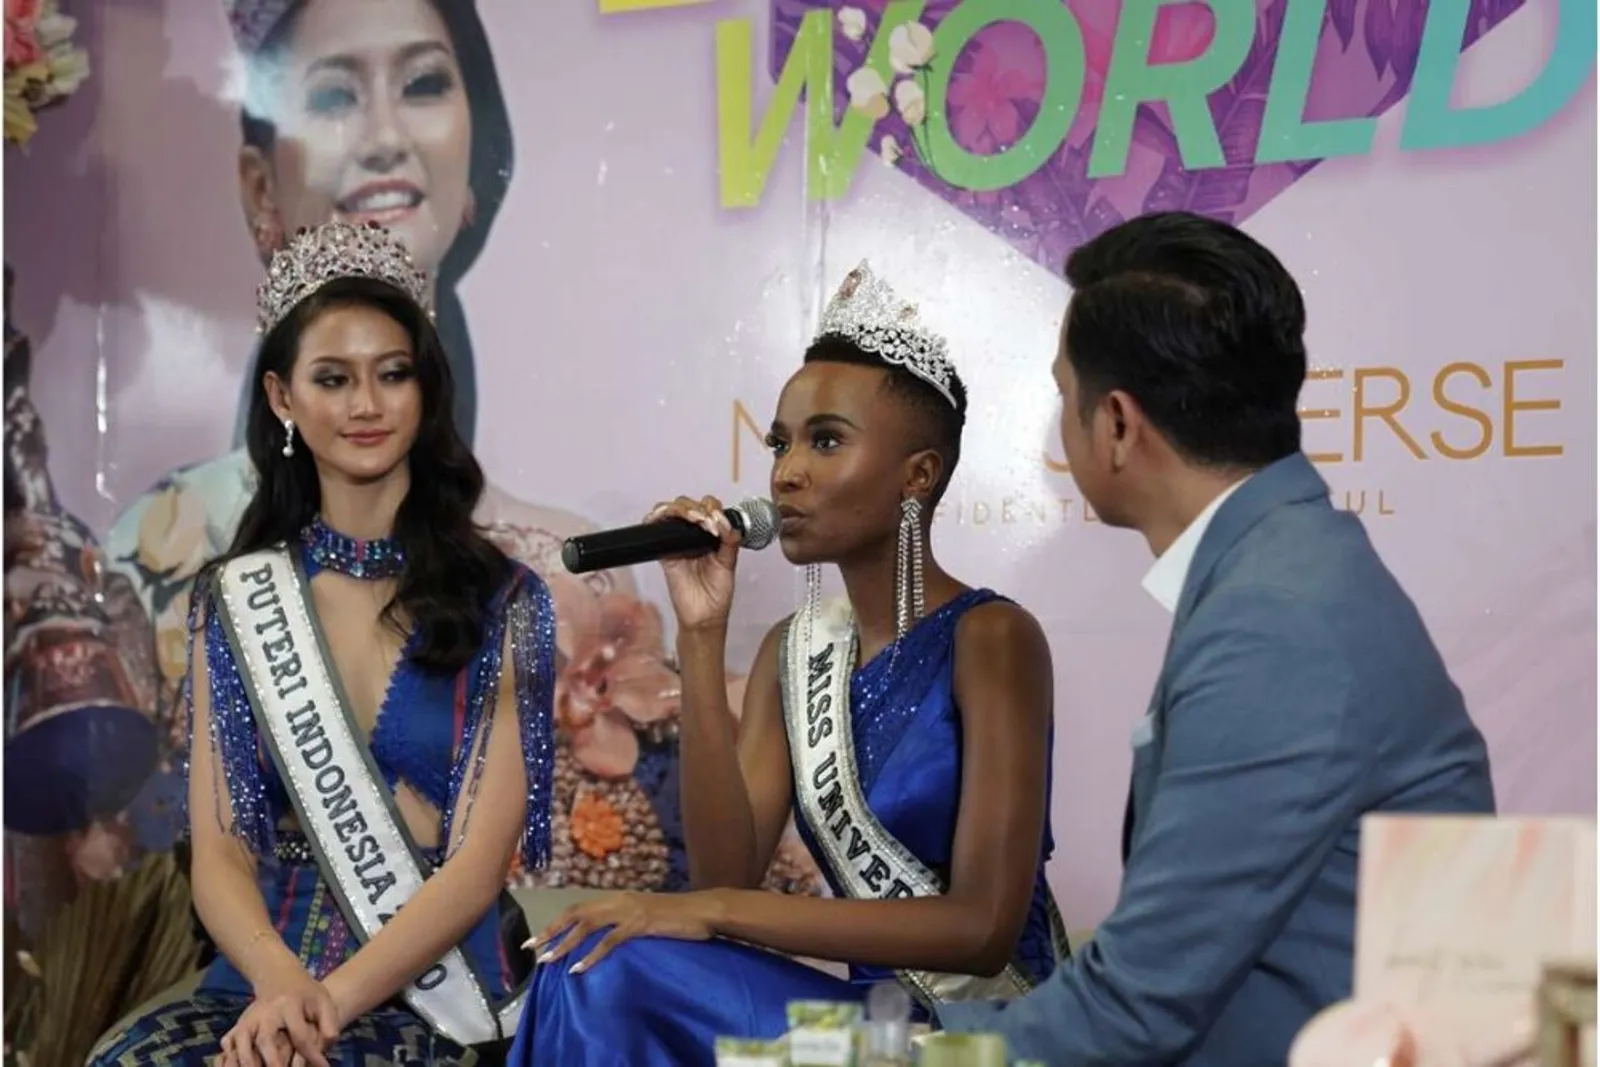 Lazada Undang Miss Universe & Miss Indonesia dalam Acara Beauty World